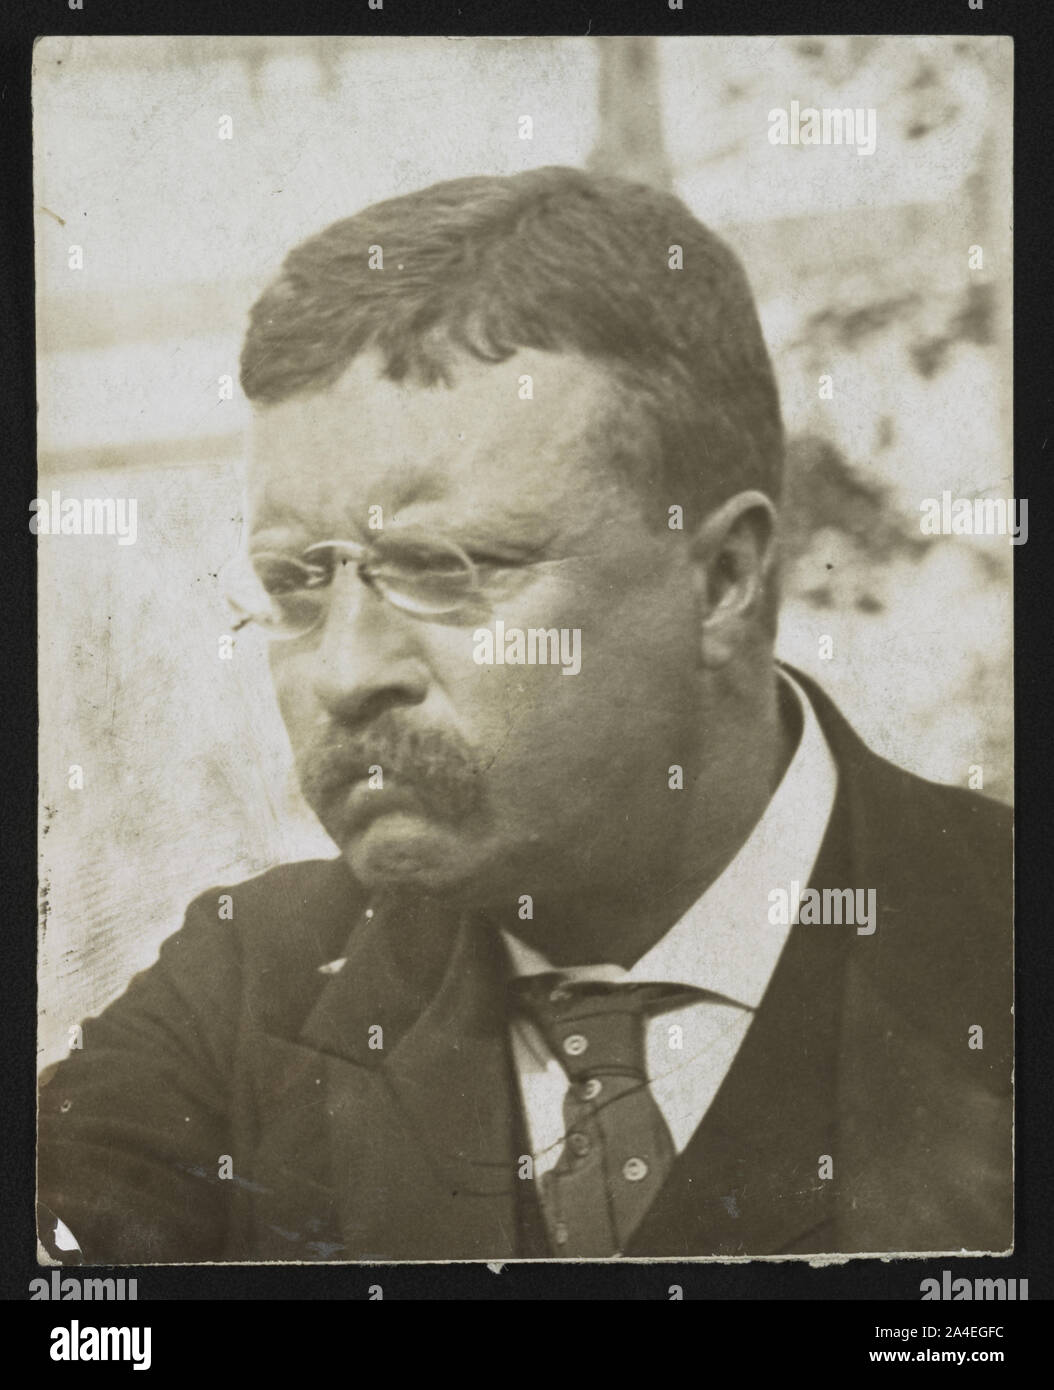 Theodore Roosevelt, busto retrato, mirando a la izquierda Foto de stock